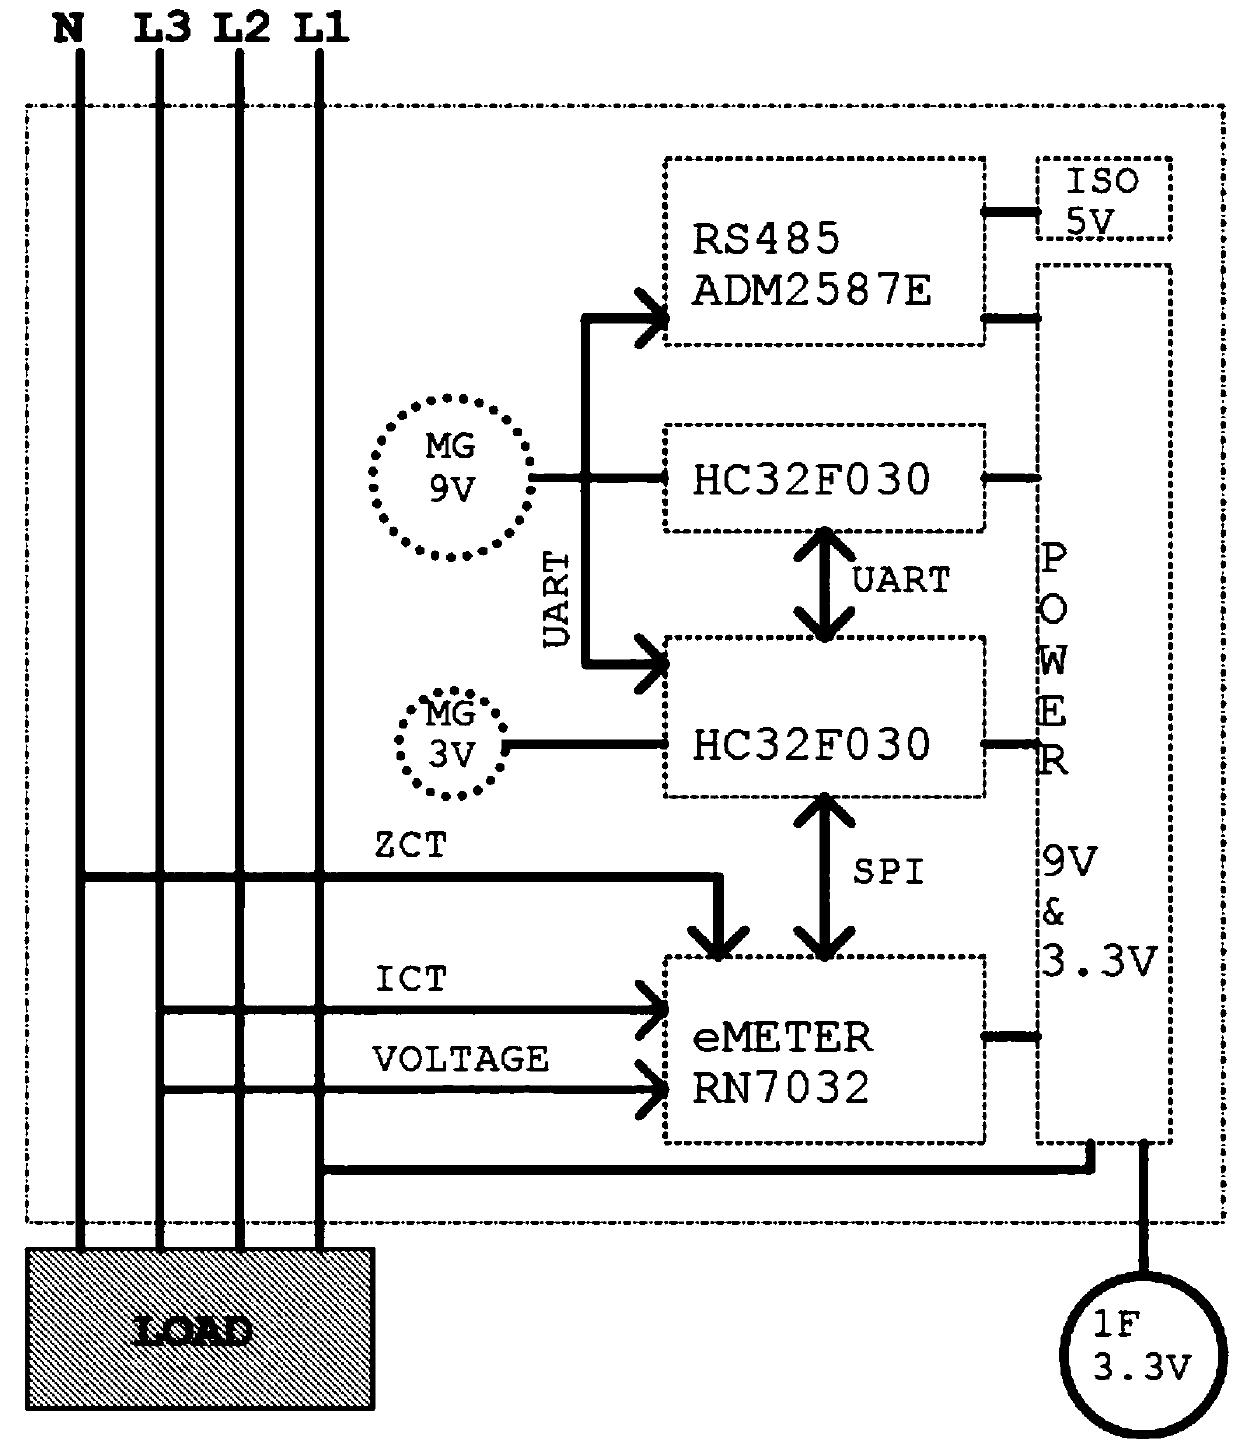 Intelligent circuit breaker based on edge analysis technology and setting method